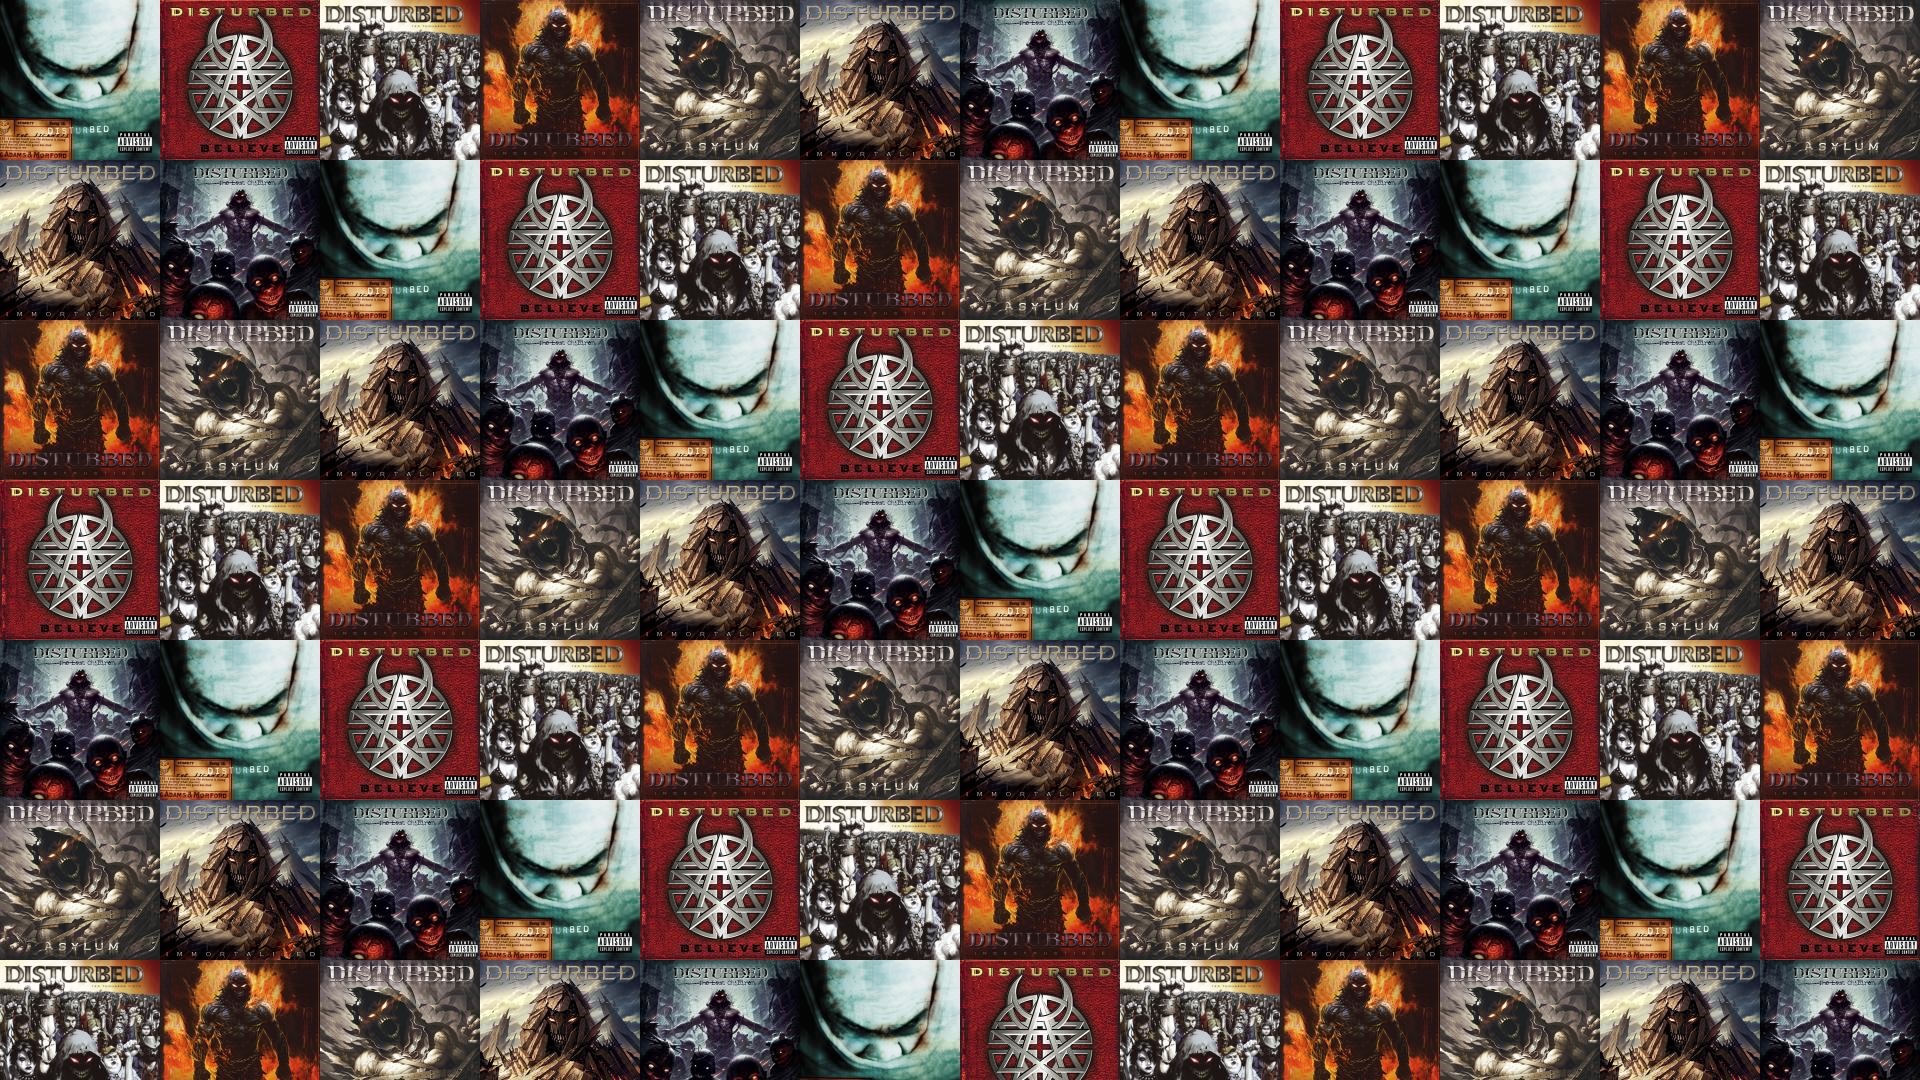 1920x1080 Disturbed Sickness Believe Ten Thousand Fists Indestructible Asylum  Wallpaper Â« Tiled Desktop Wallpaper